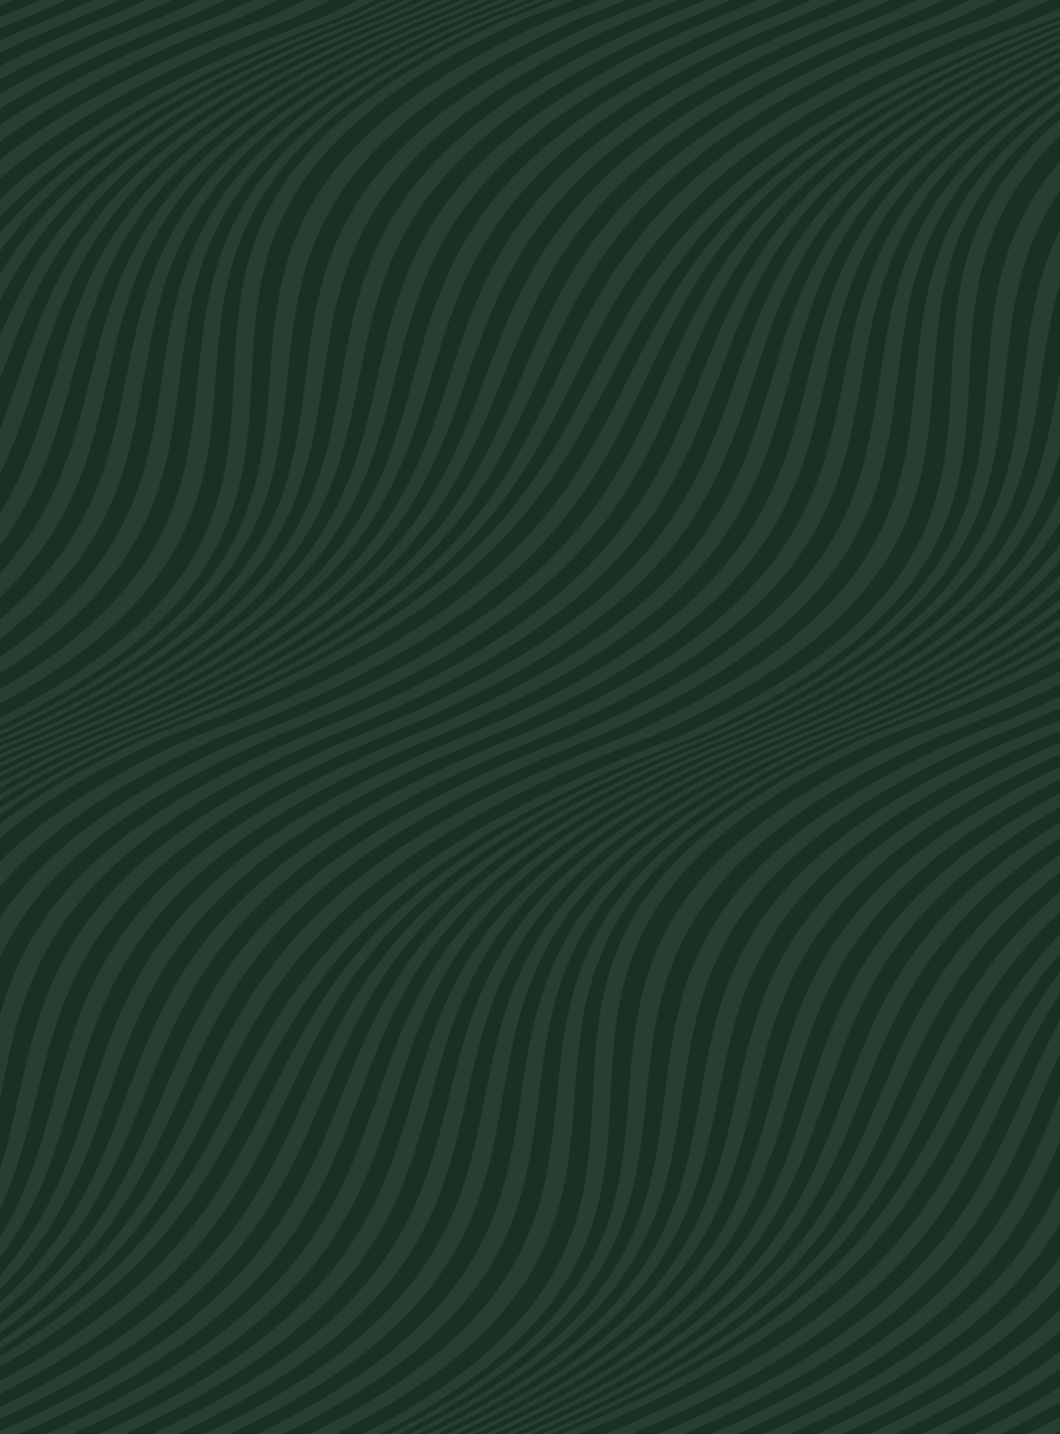 bg-green-pattern-wave.png